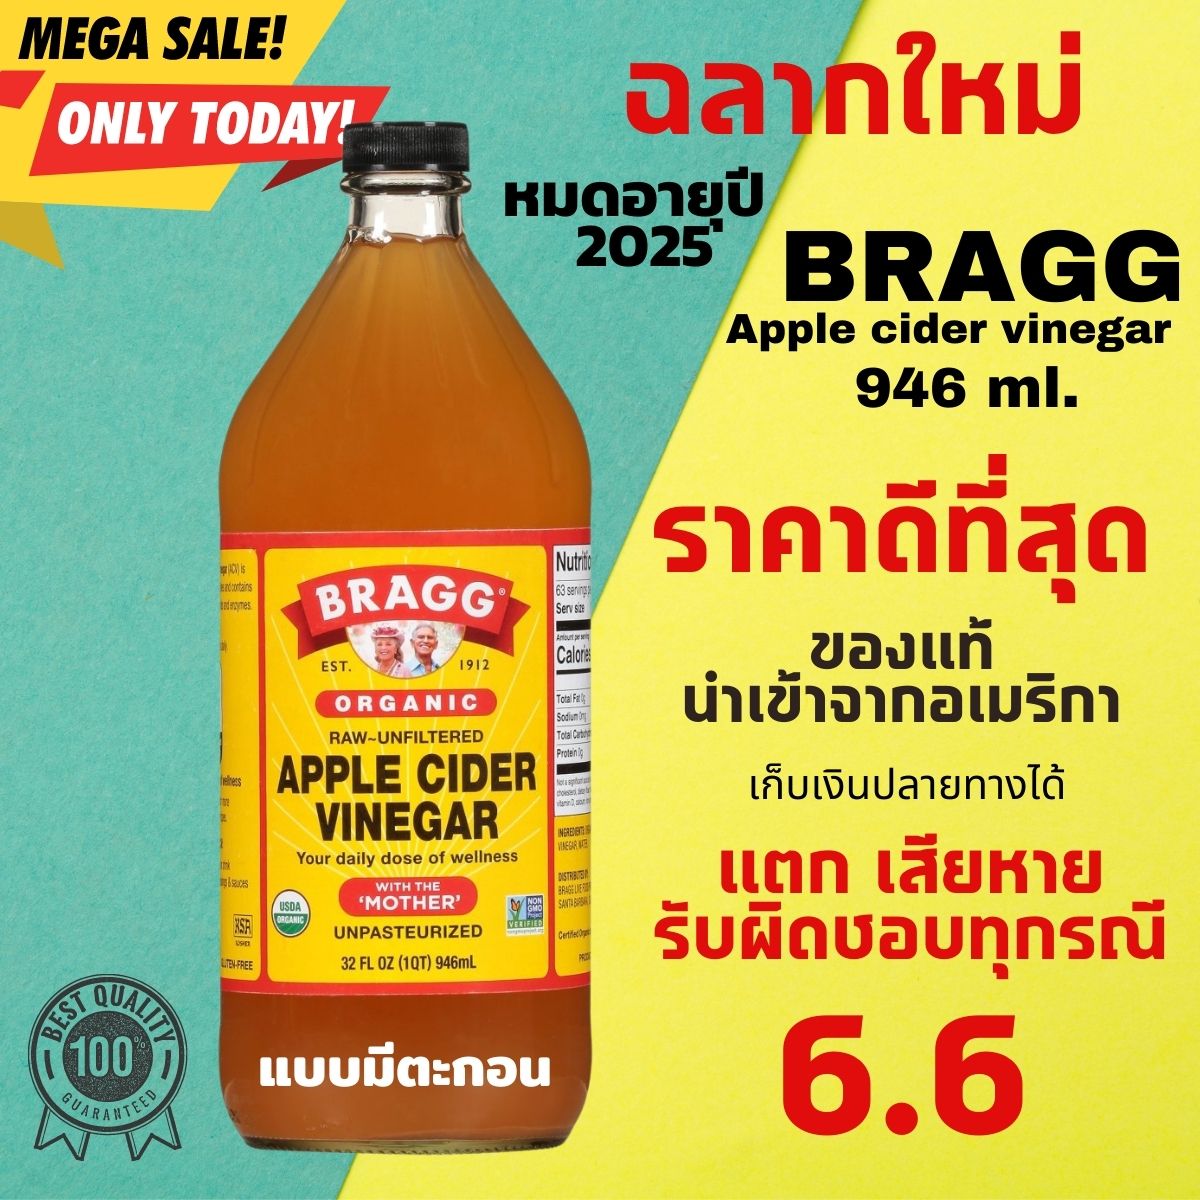 Bragg Apple Cider vinegar ขวดใหญ่ 946 ml. ของแท้นำเข้าจากอเมริกา หมดอายุปี 2025 ล็อตใหม่ แบบมีตะกอน